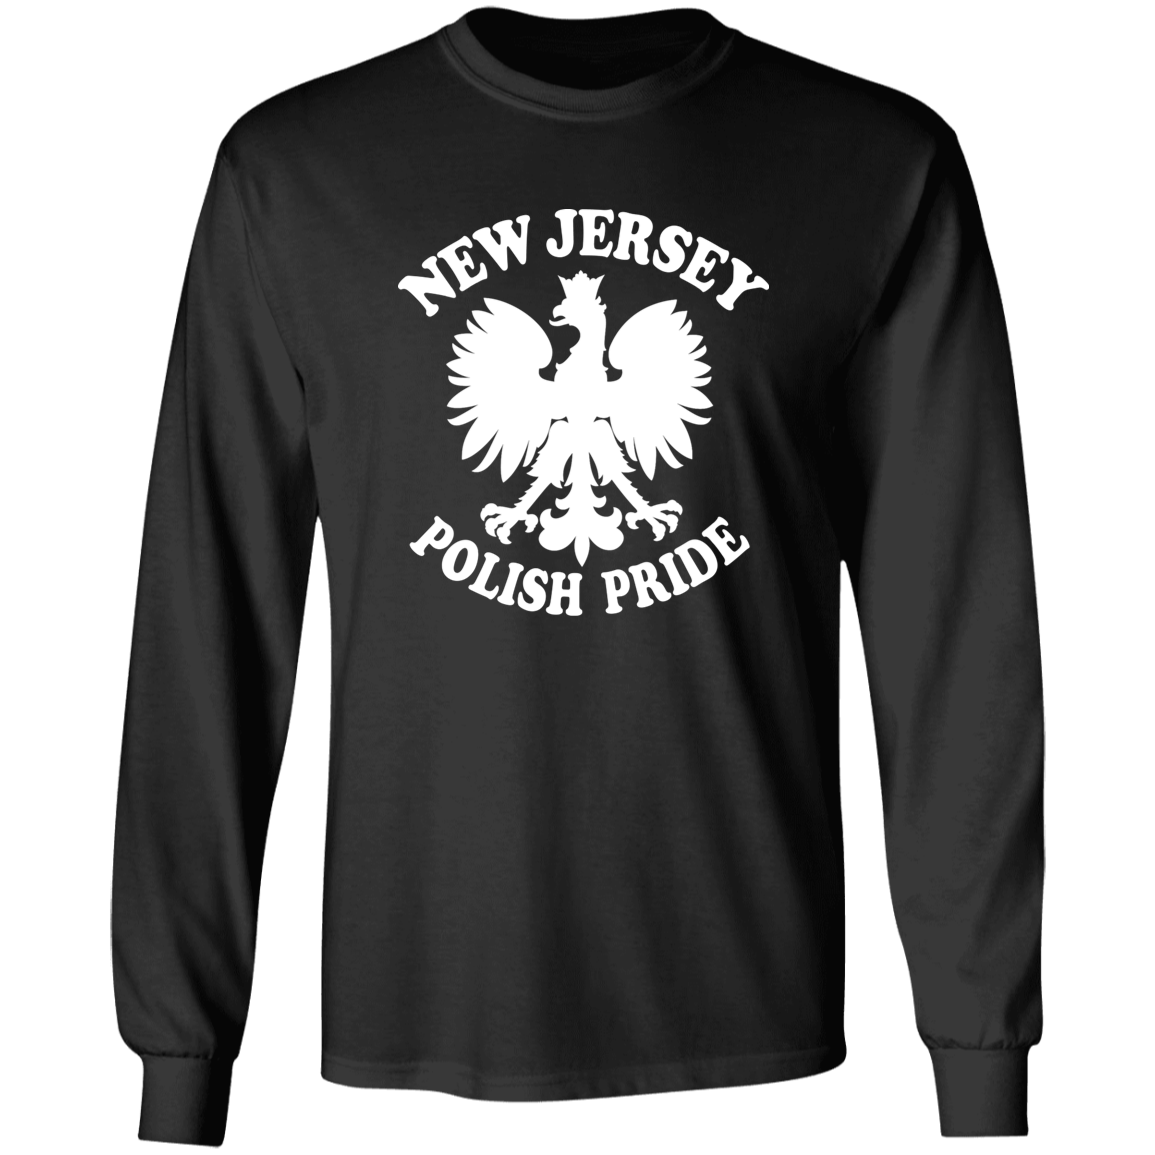 New Jersey Polish Pride Apparel CustomCat G240 LS Ultra Cotton T-Shirt Black S